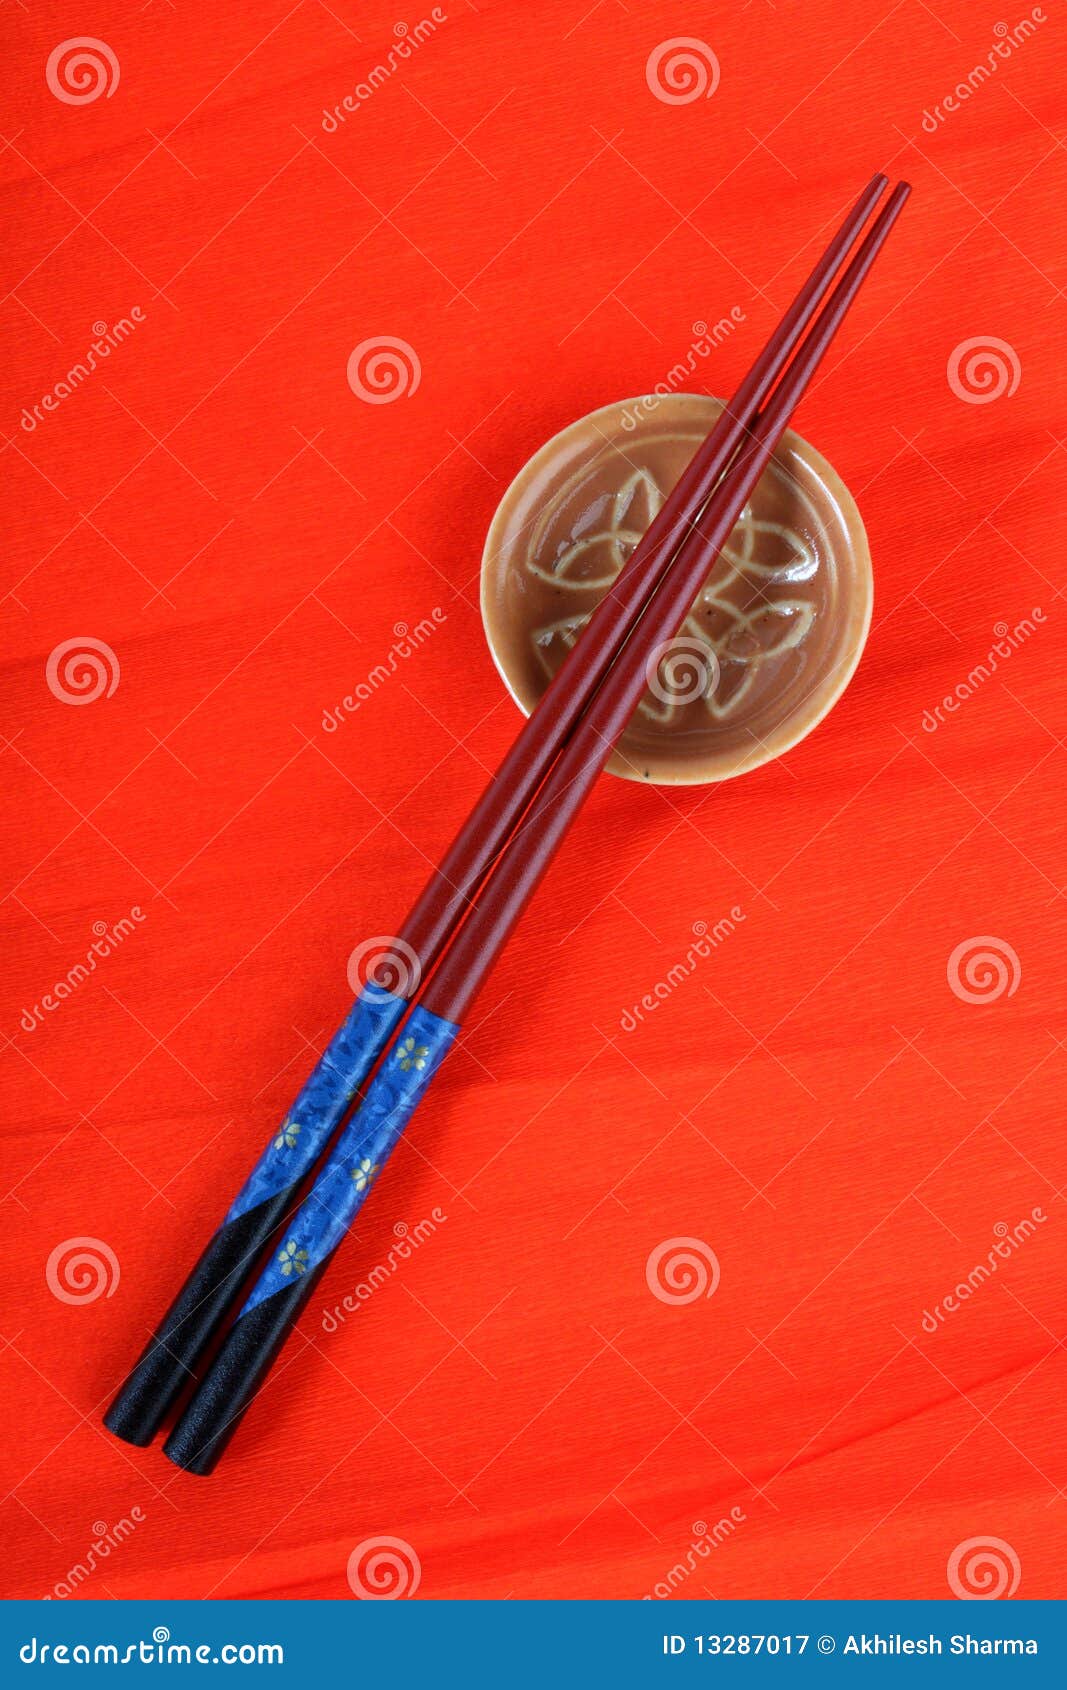 Chopsticks. 红色背景的筷子